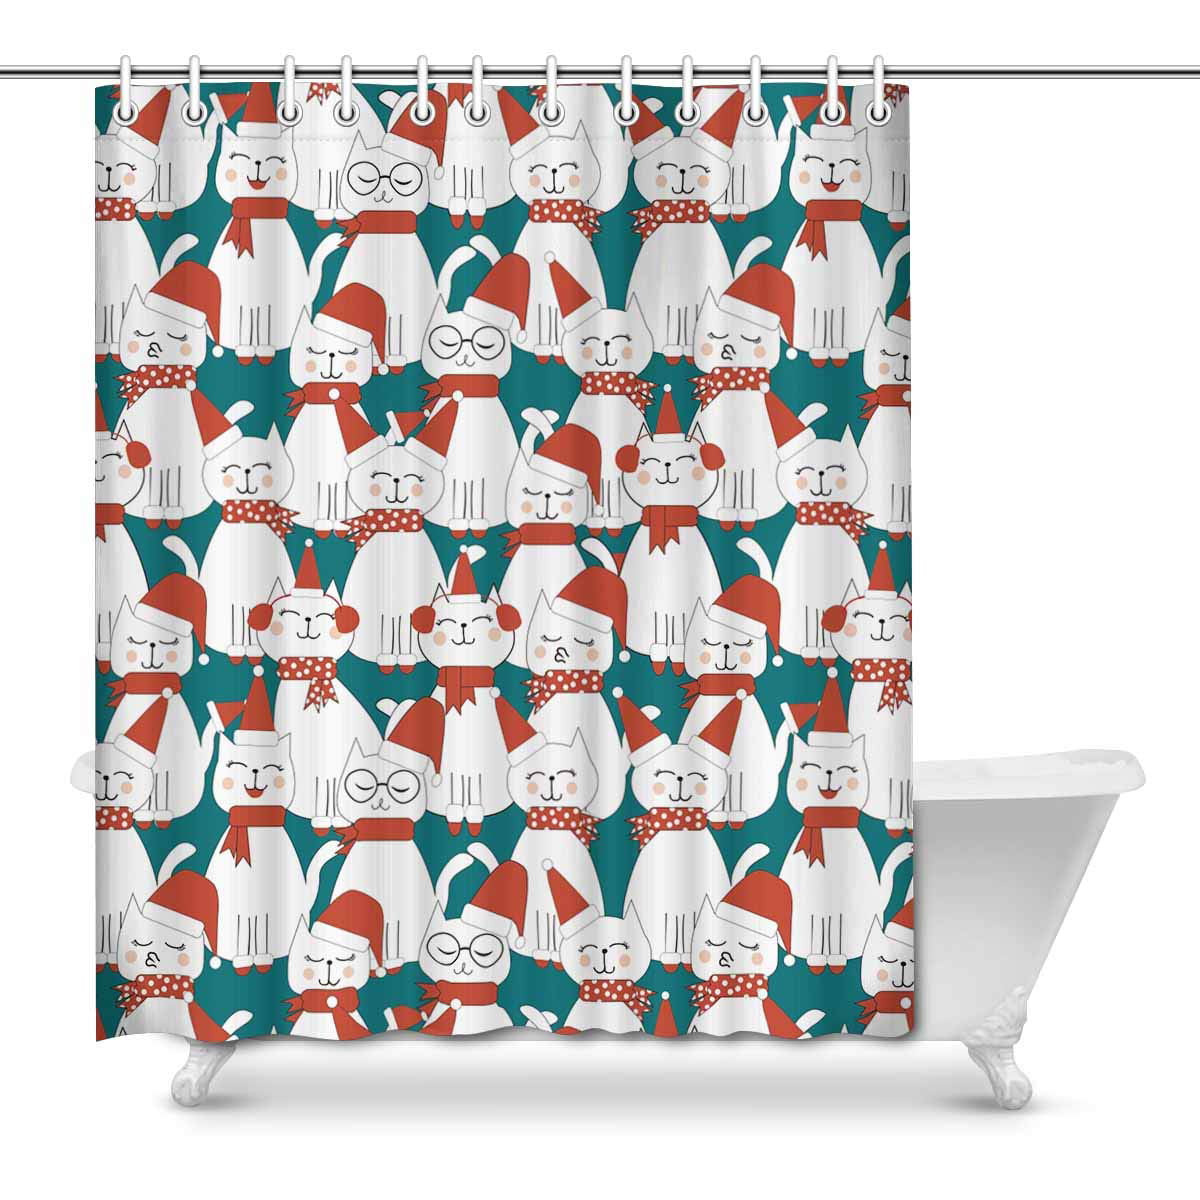 Snoopy Happy Christmas Custom Print Shower Curtain Size 48x72 60x72 66x72 Inch 